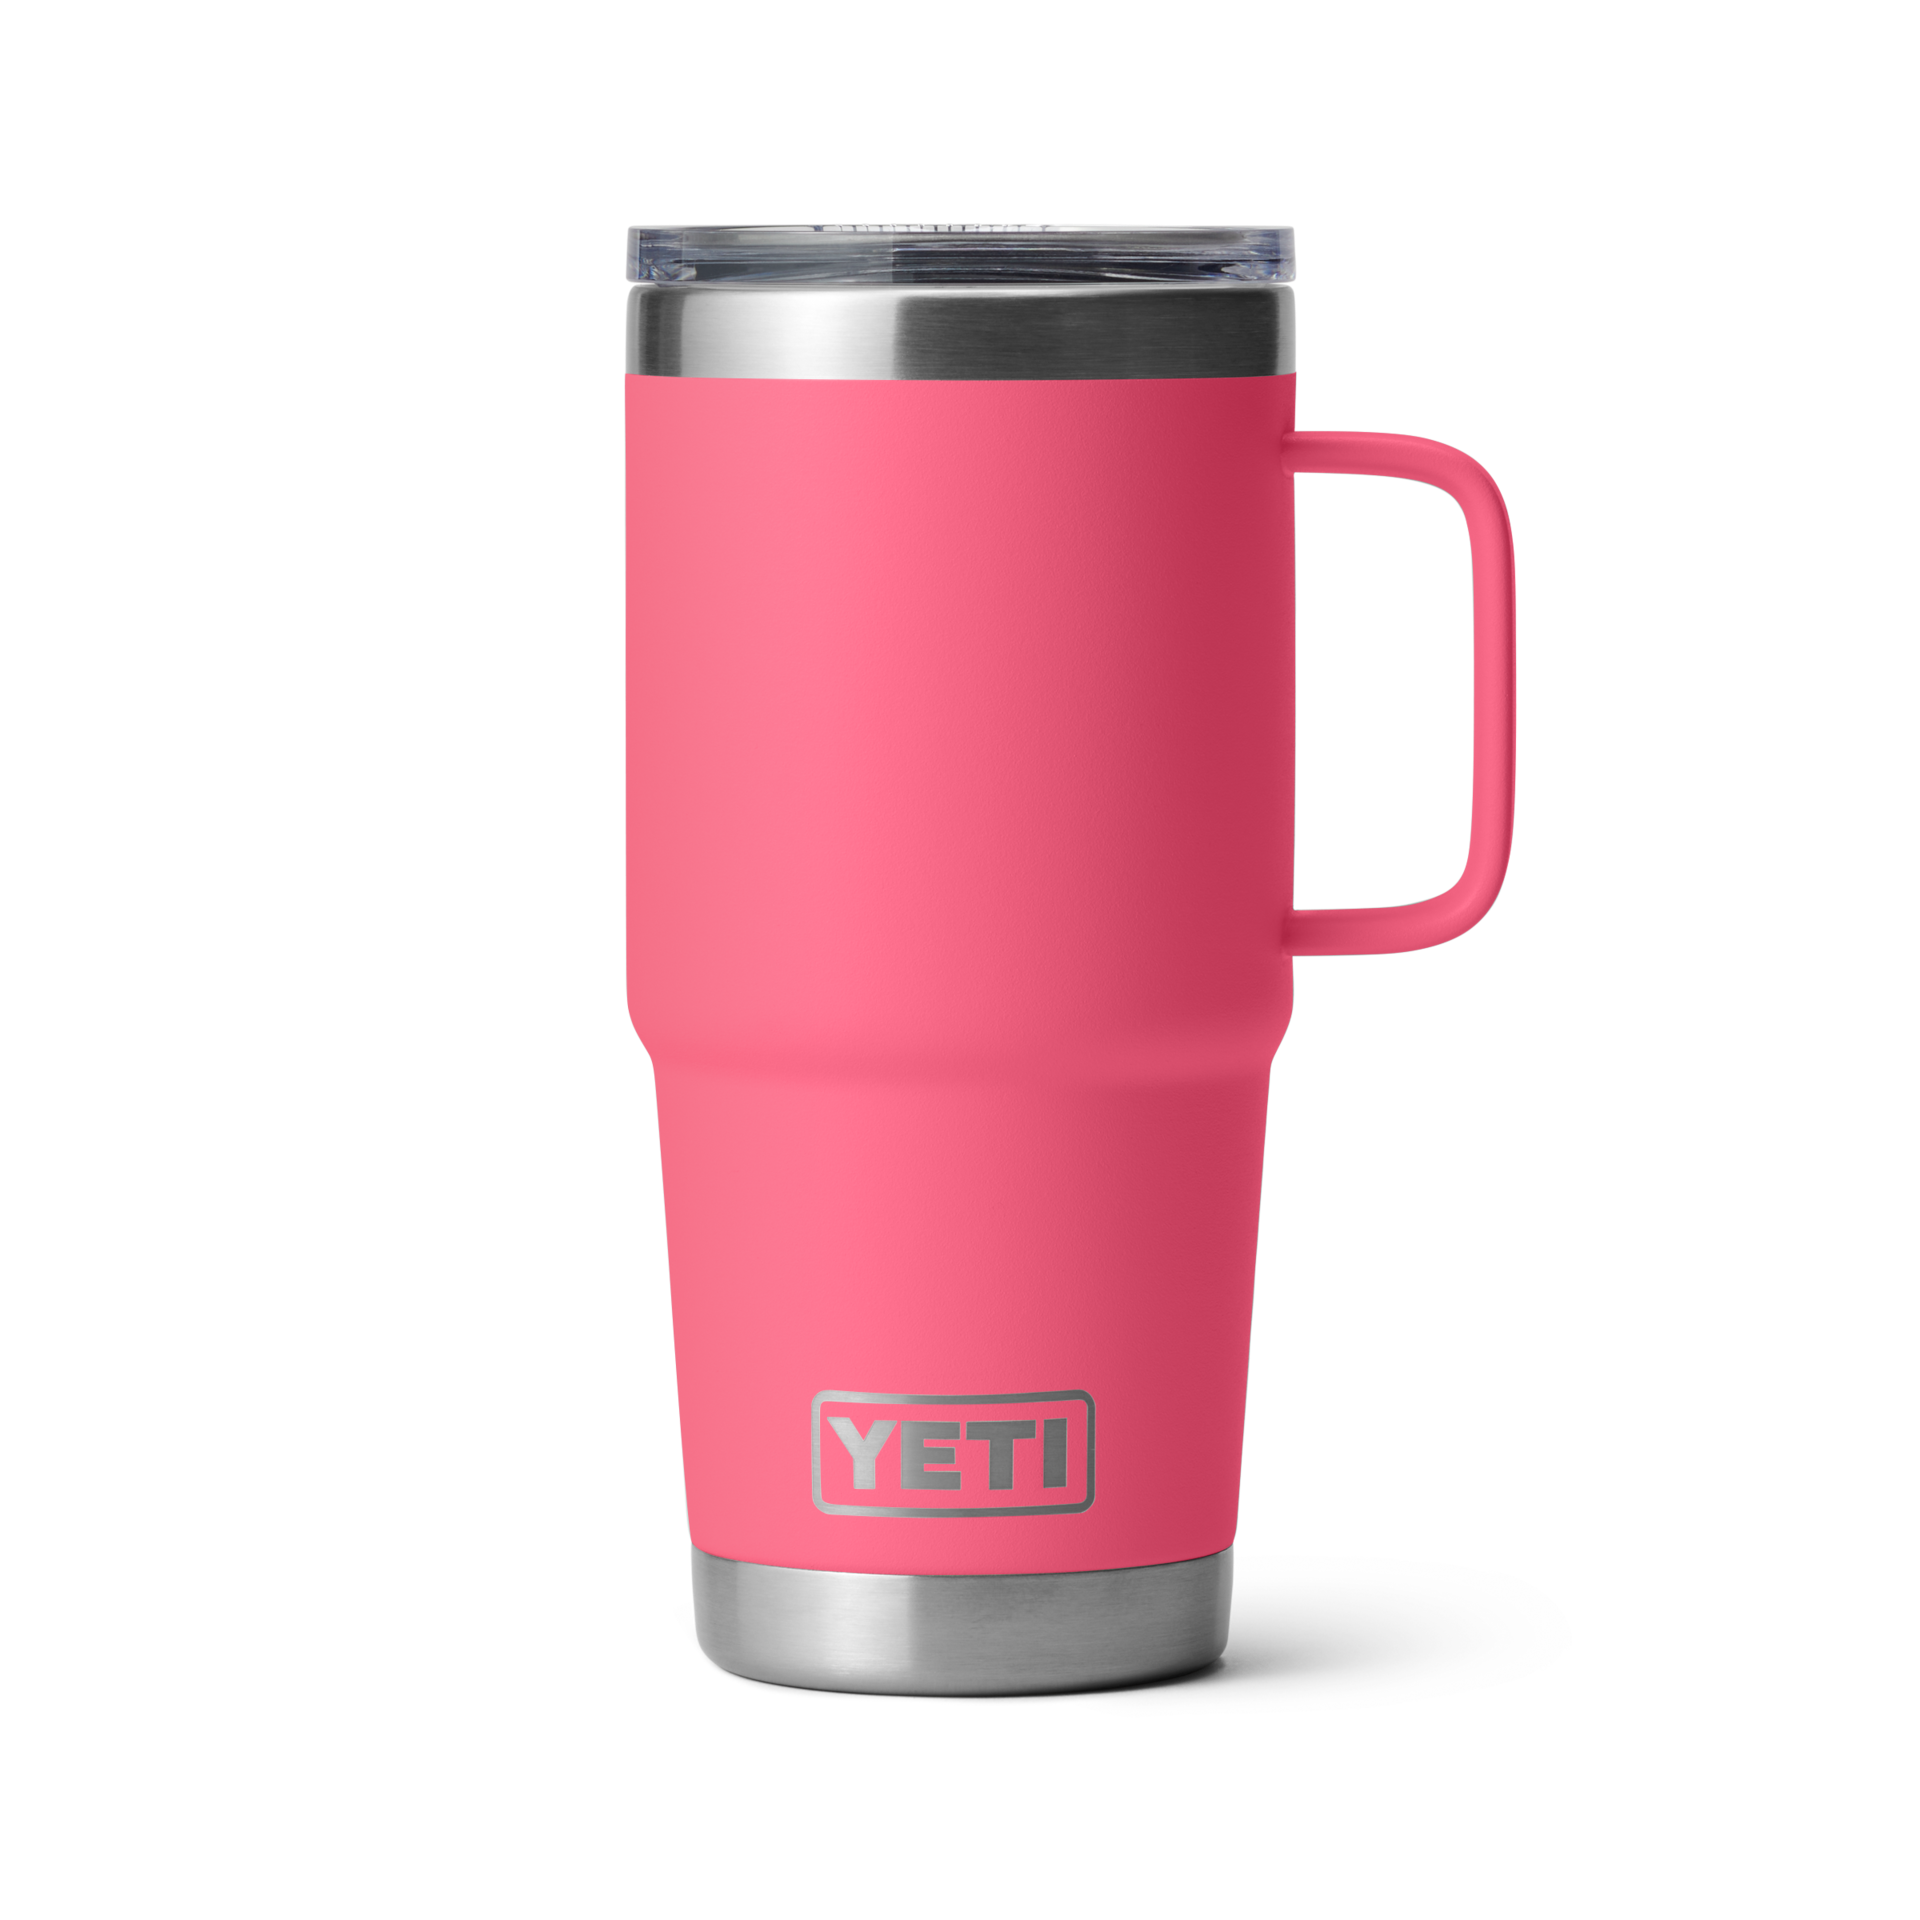 Yeti Rambler 20oz/591ml Travel Mug - Tropical Pink - Seasonal